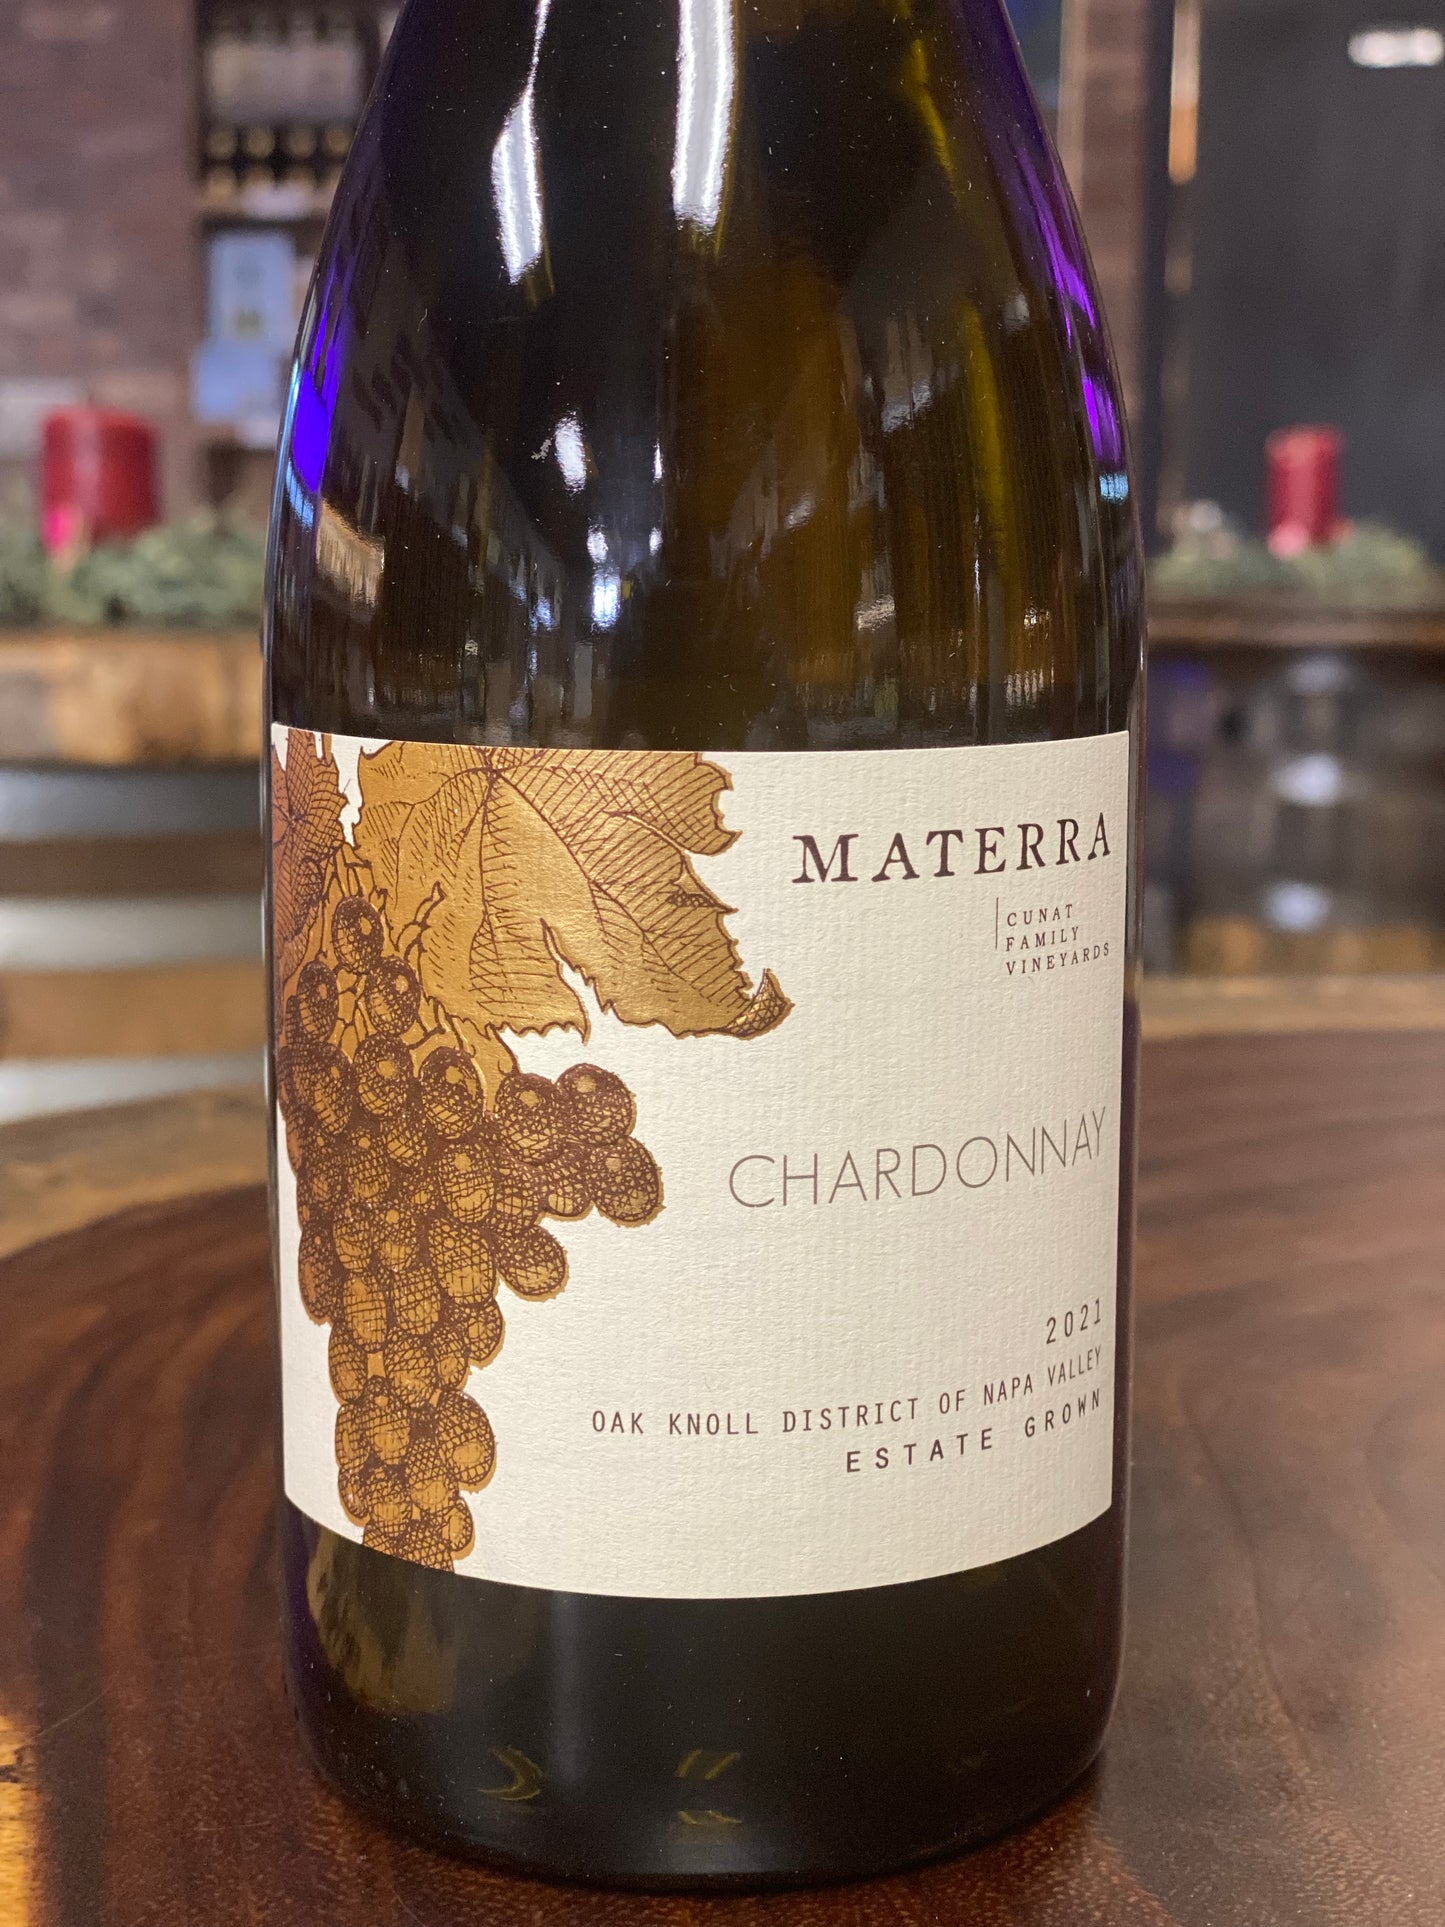 Materra Chardonnay “Oak Knoll” Napa Valley